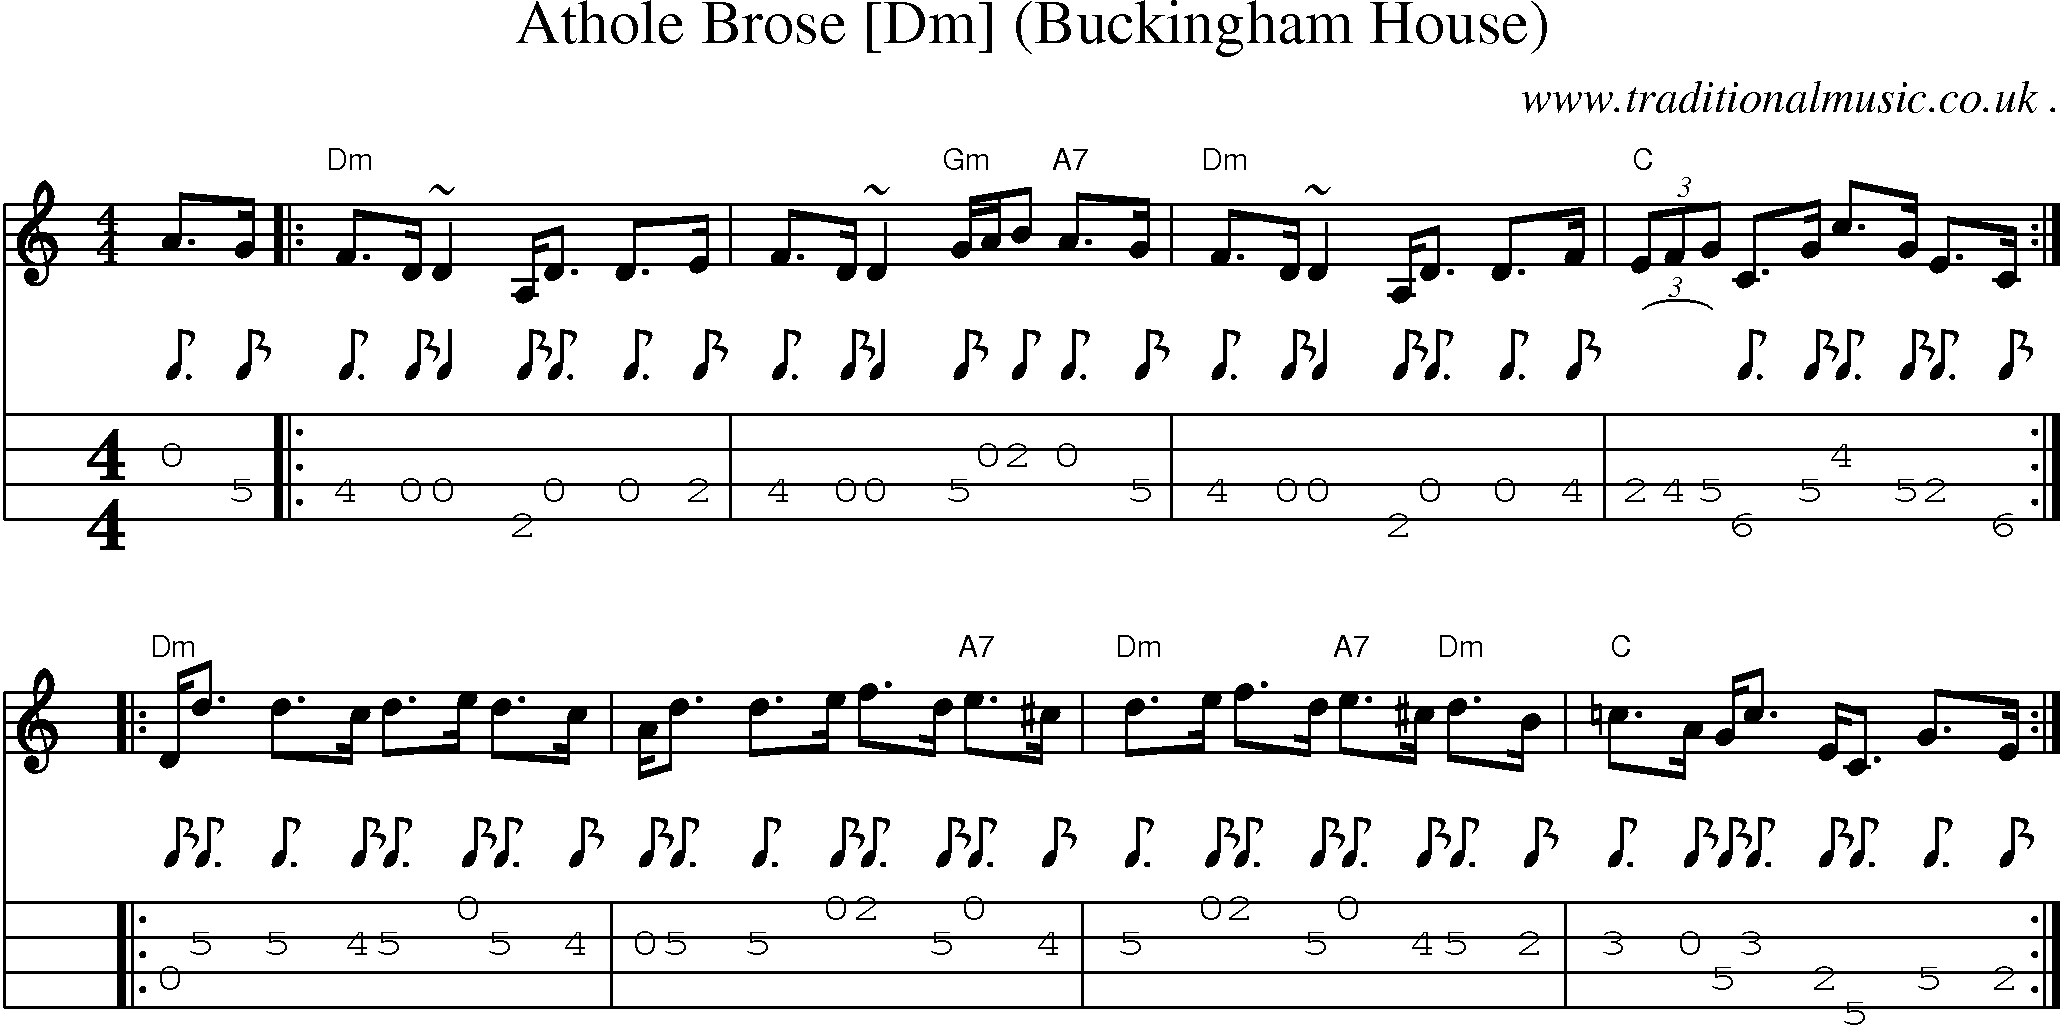 Sheet-music  score, Chords and Mandolin Tabs for Athole Brose [dm] Buckingham House